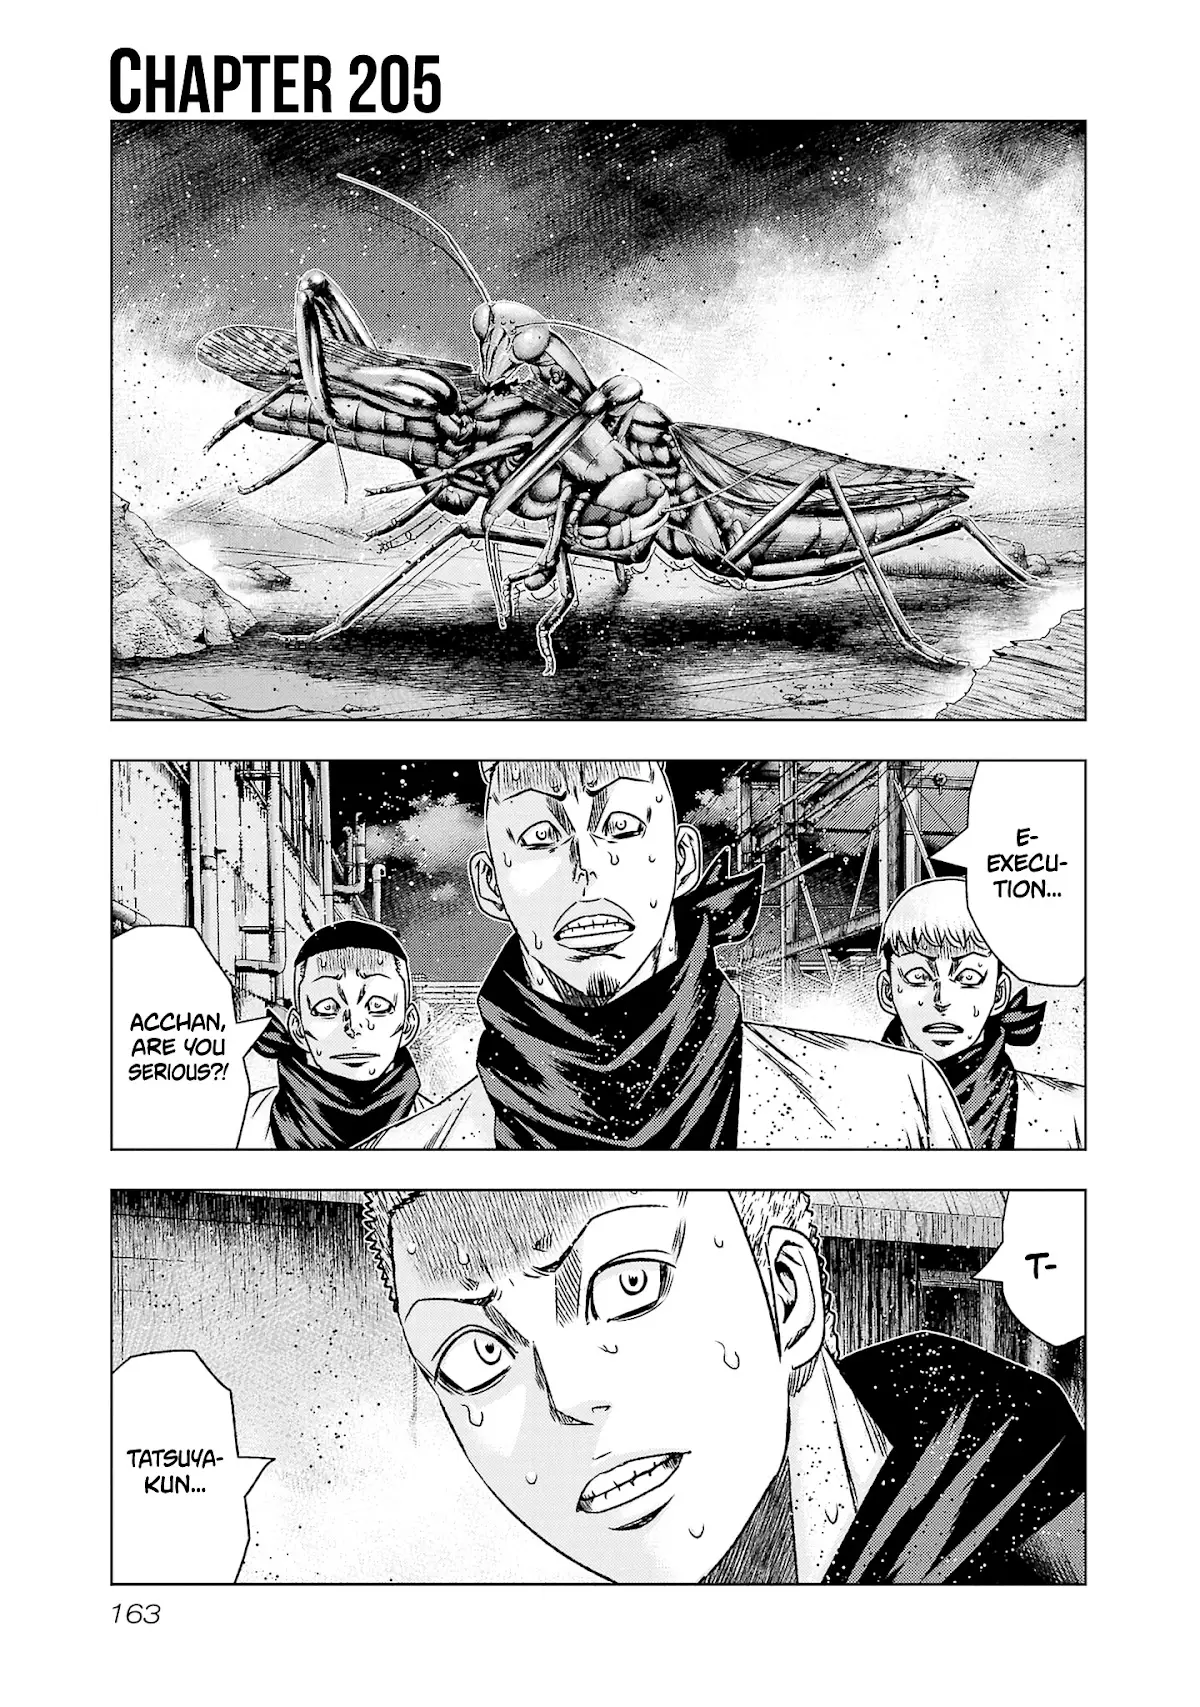 Out (Makoto Mizuta) - 205 page 2-96092dba